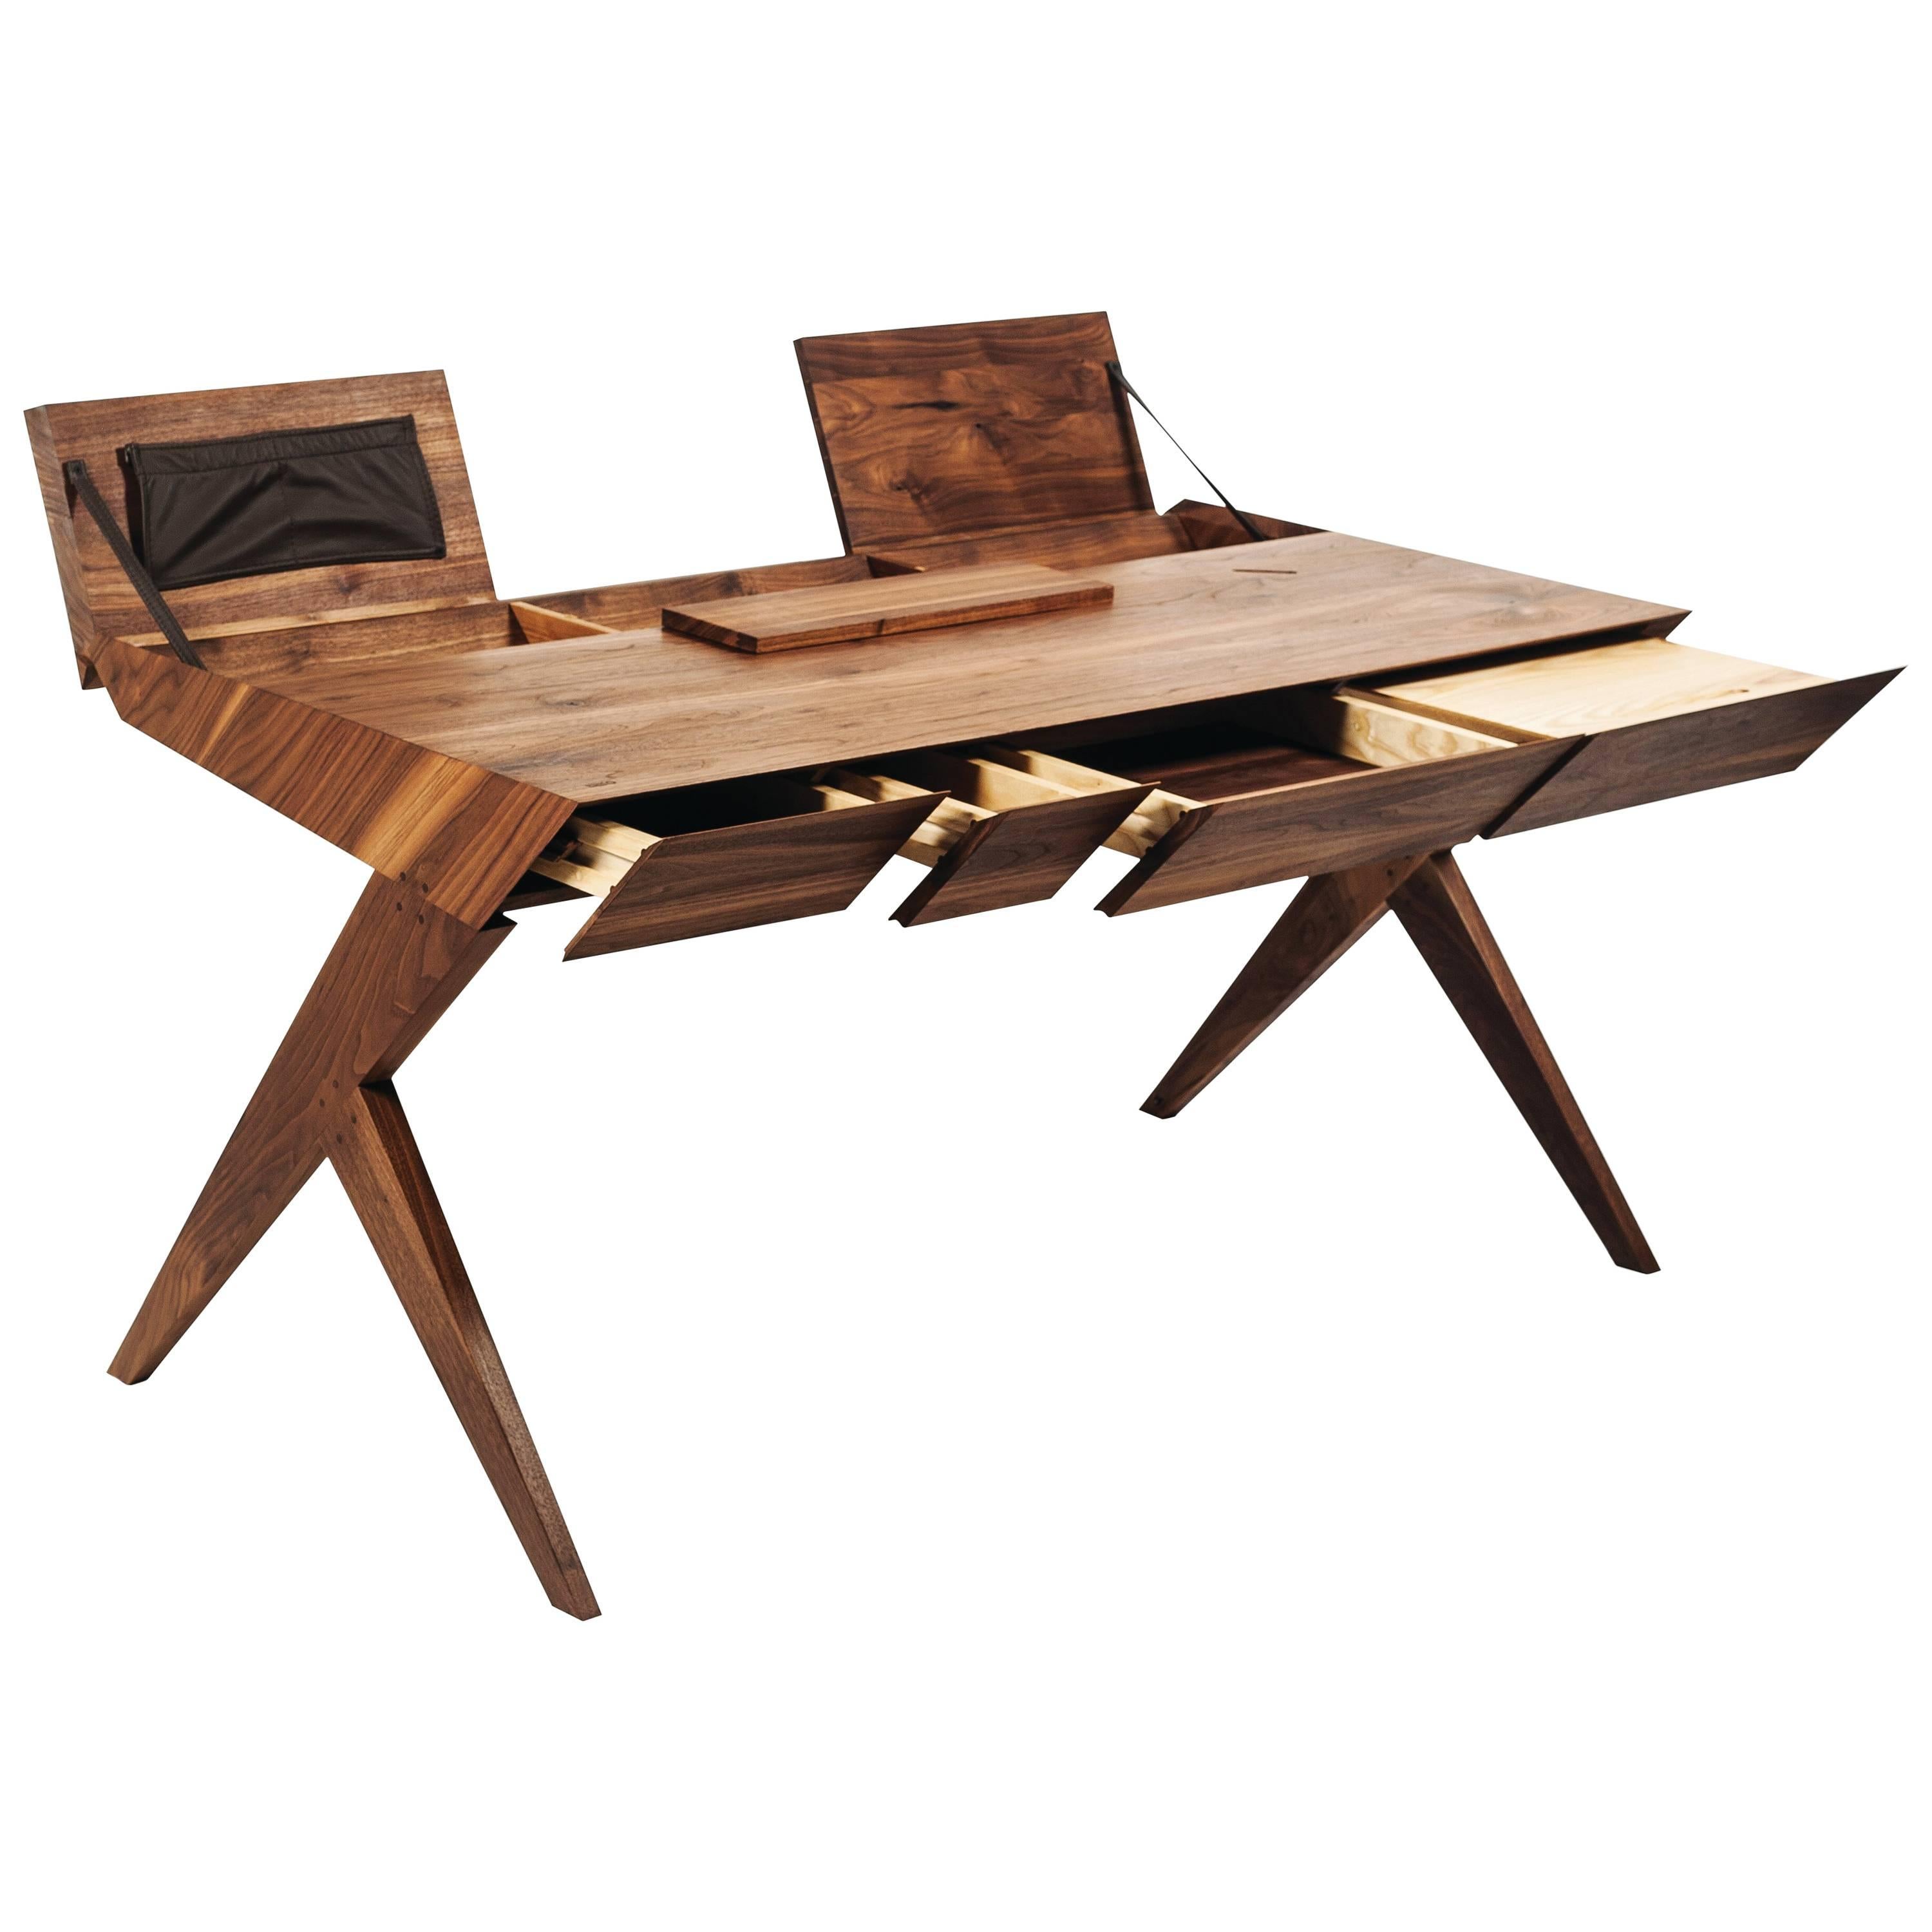 "Locust" Wood Desk, Alexandre Caldas